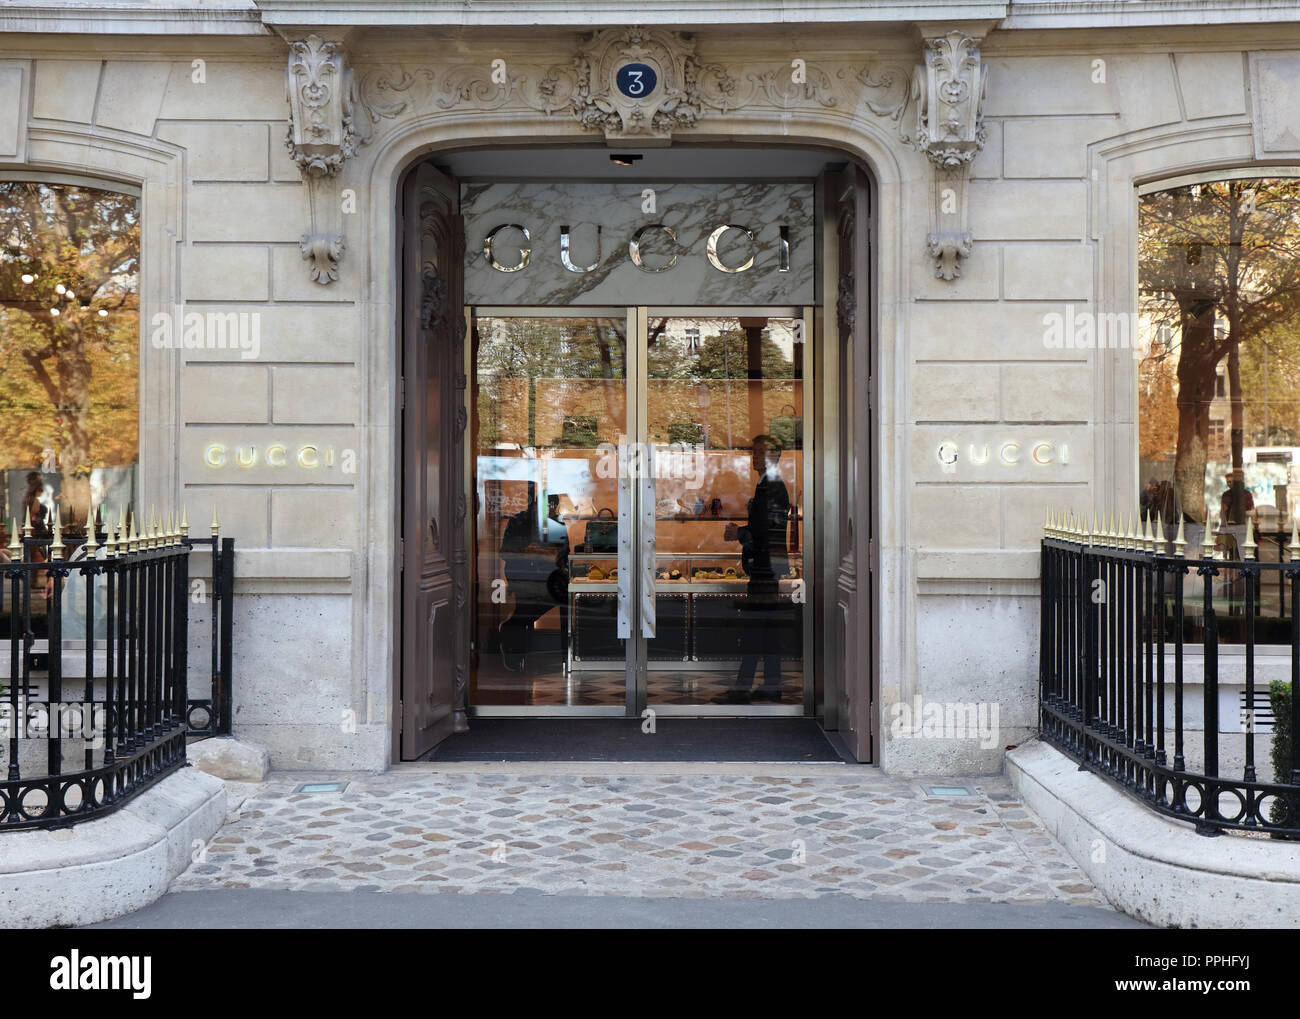 Paris, France, 21 september 2018: Gucci store in Paris France Stock Photo